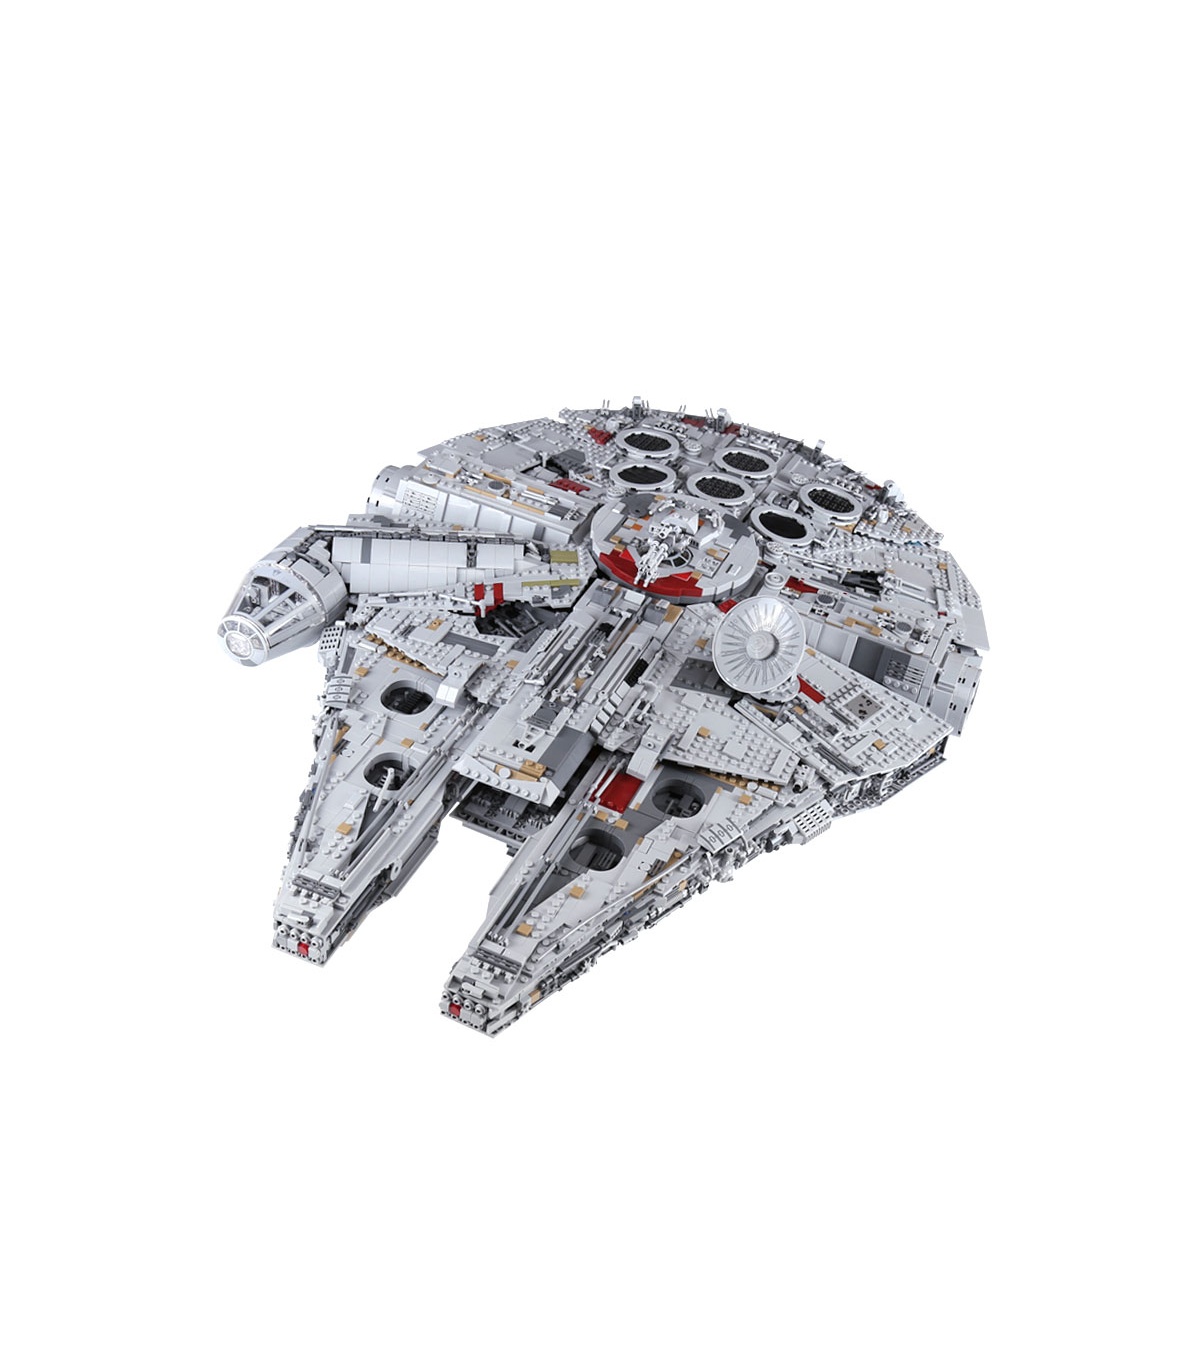 Custom Star Wars Millennium Falcon Building Bricks Toy Set 8445 Pieces